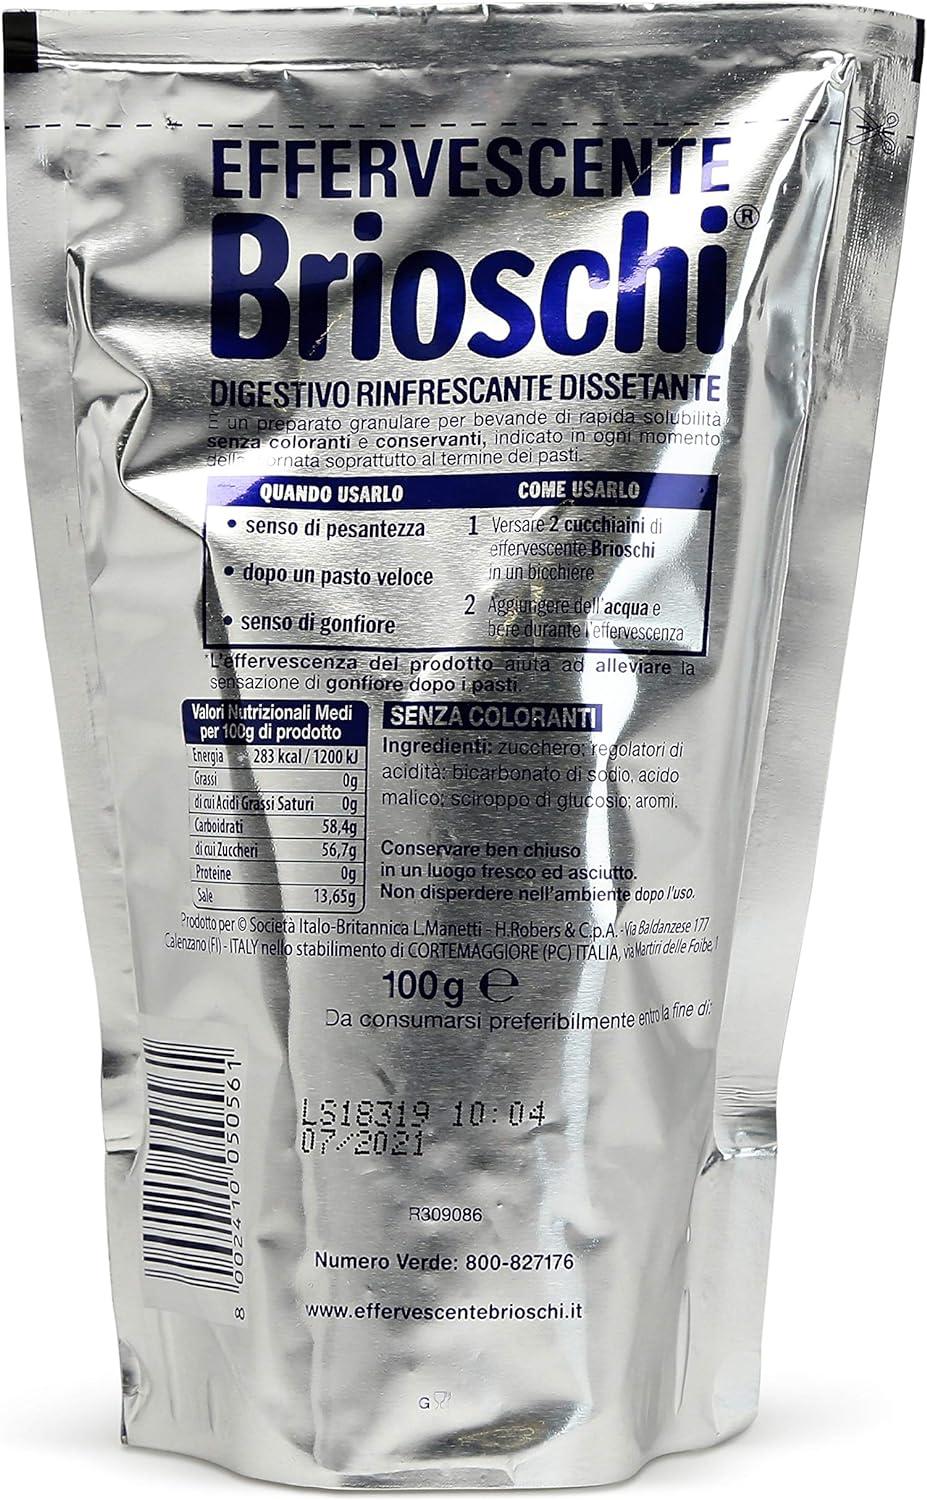 Brioschi:Digestivo rinfrescante dissetante Effervescent Antacid Lemon Taste  100 Grams Bag Italian Import